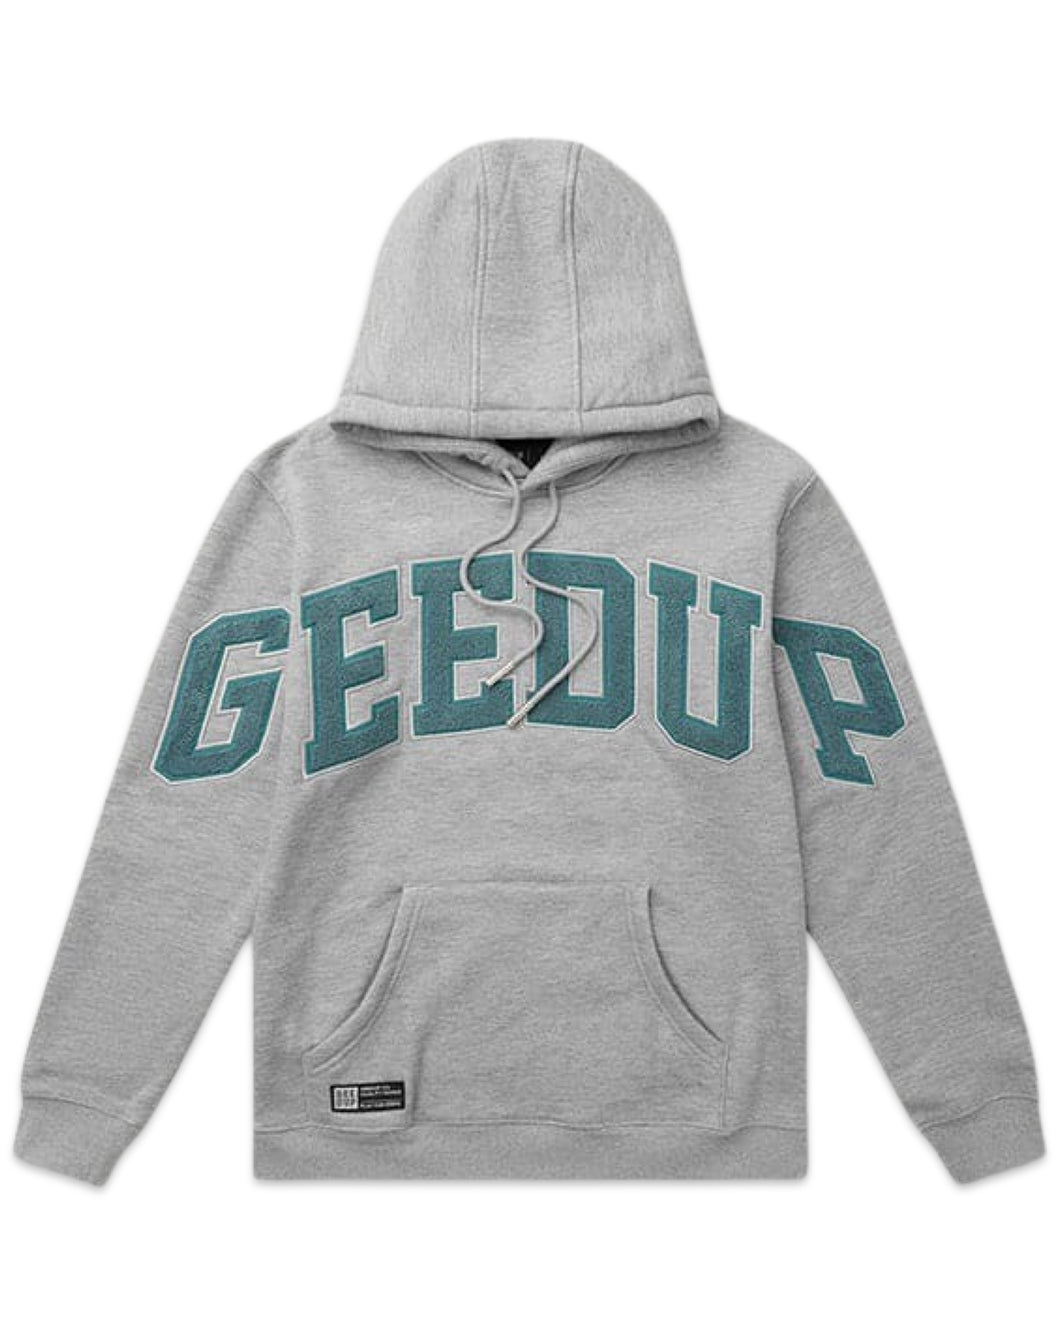 Geedup Team Logo Hoody Grey/Aqua Green Winter Del.2/22